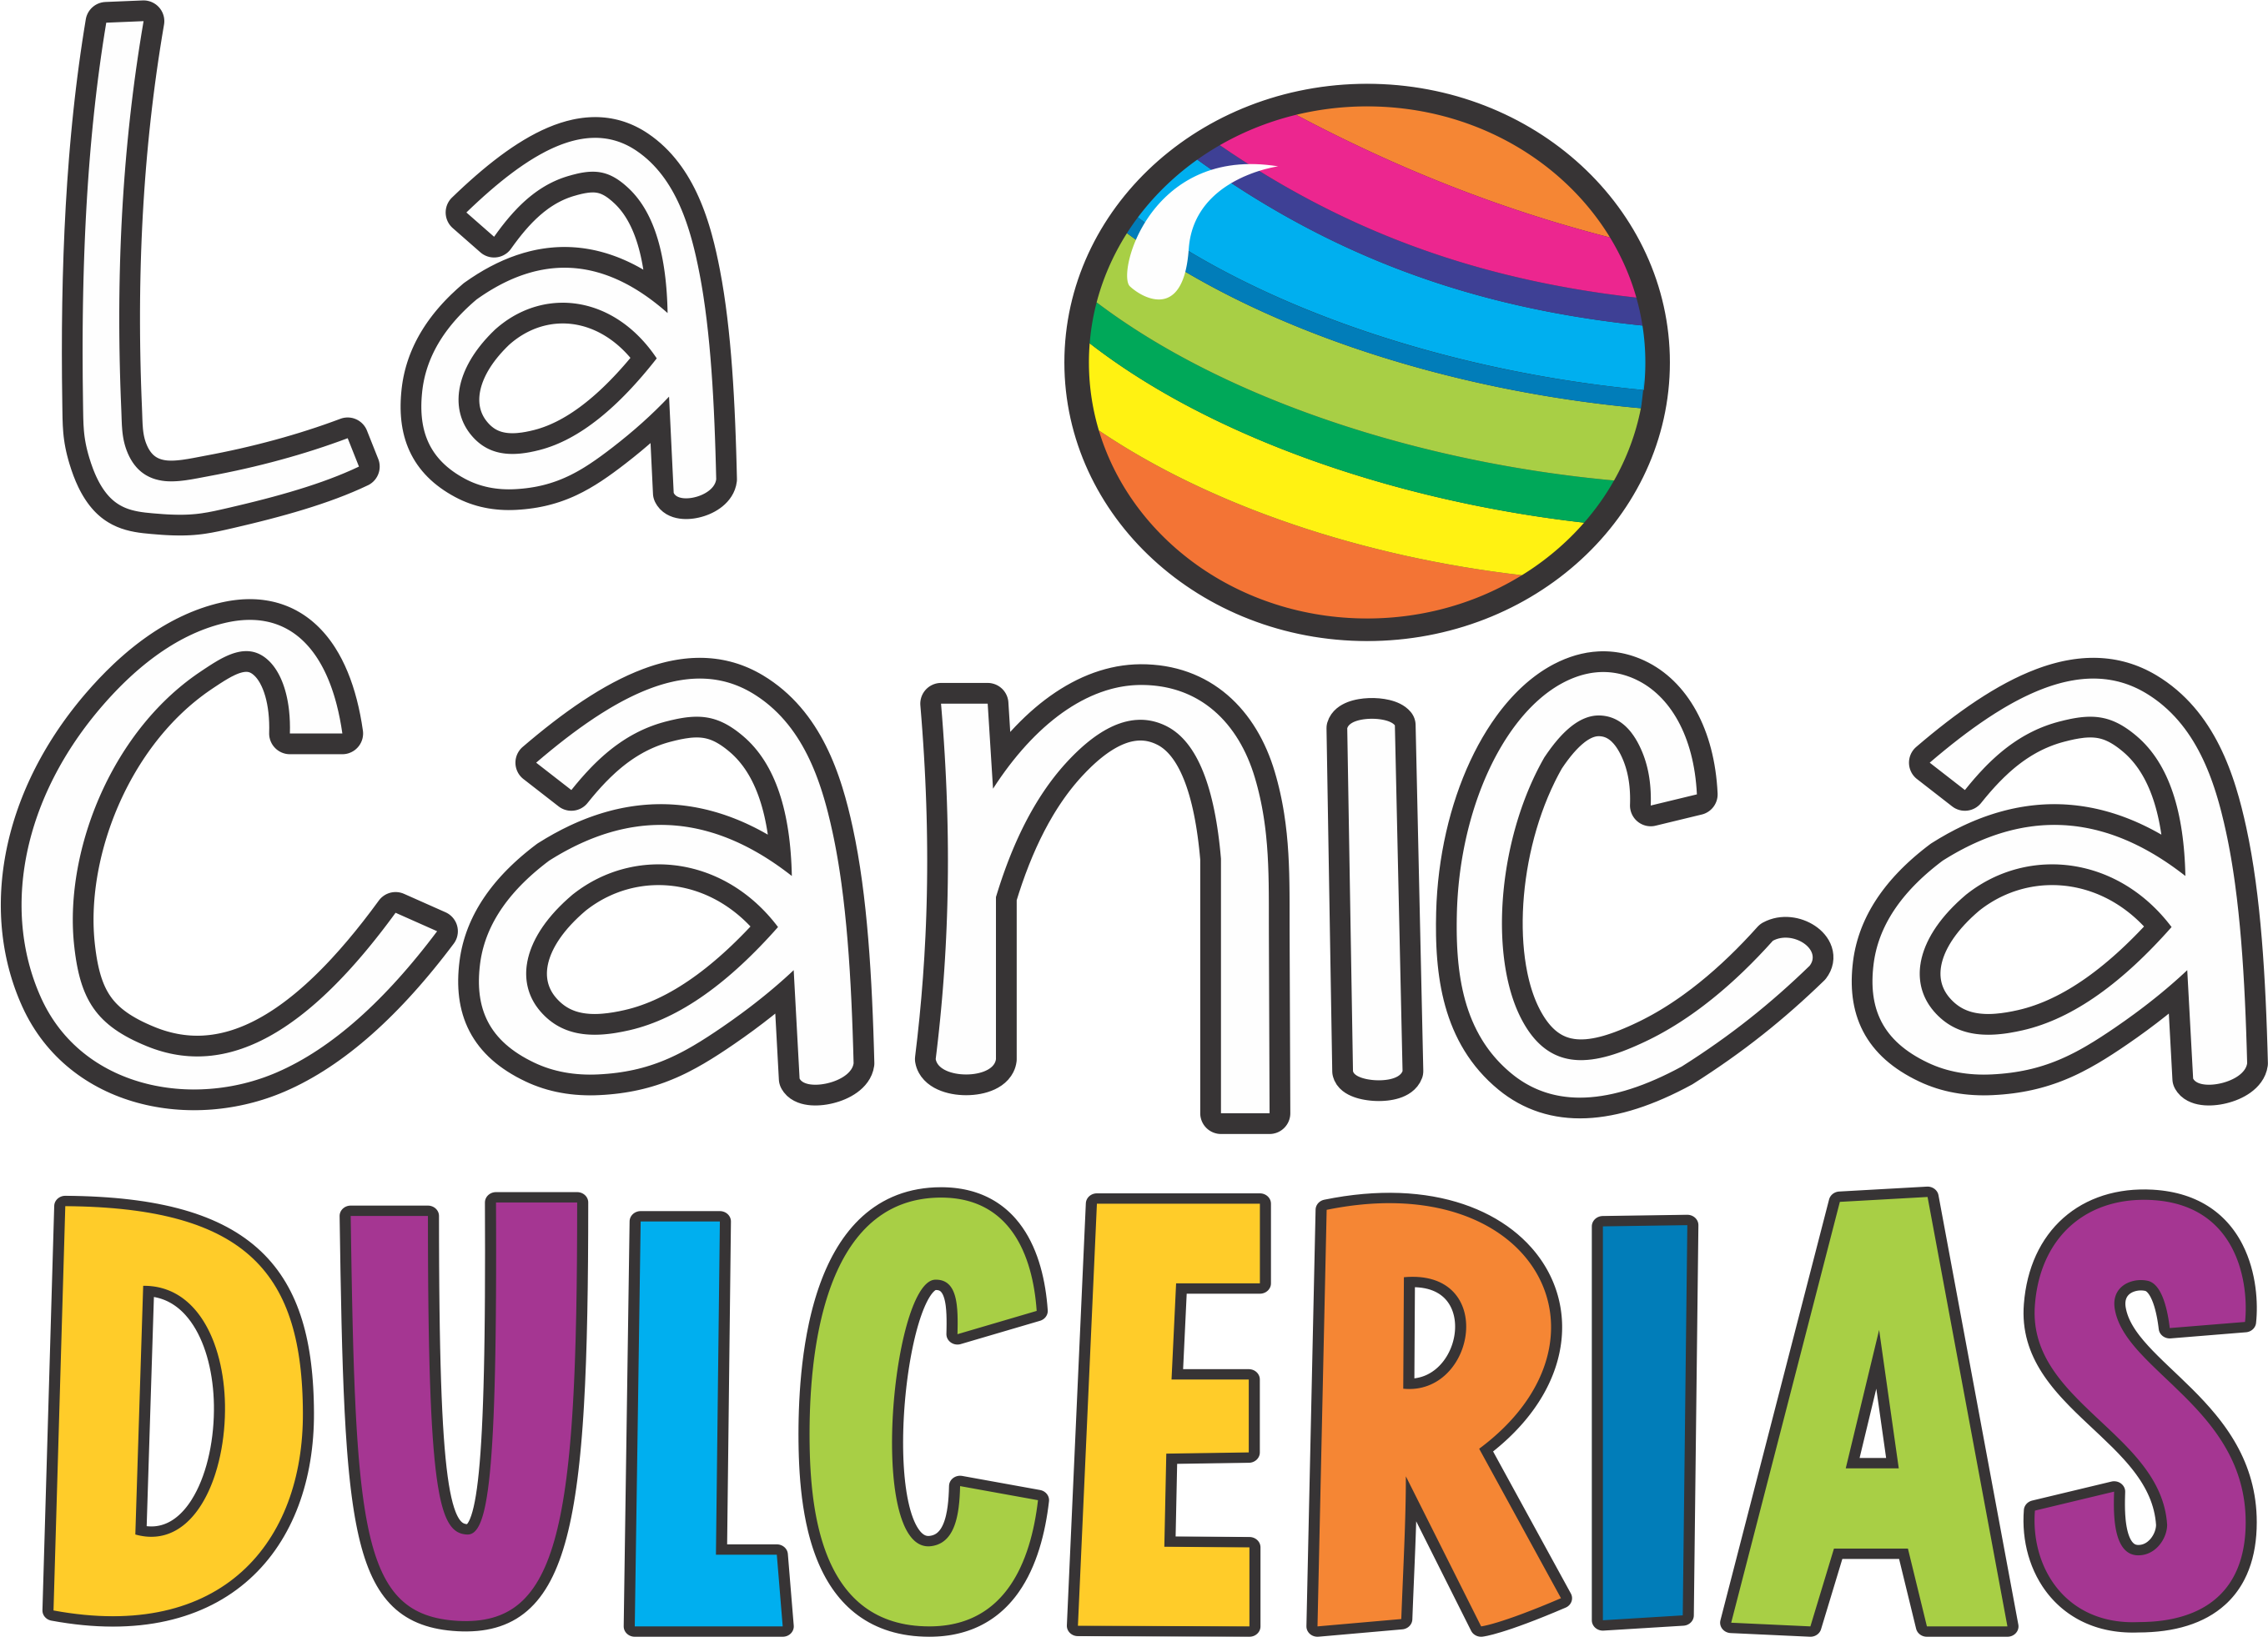 Dulcería La Canica